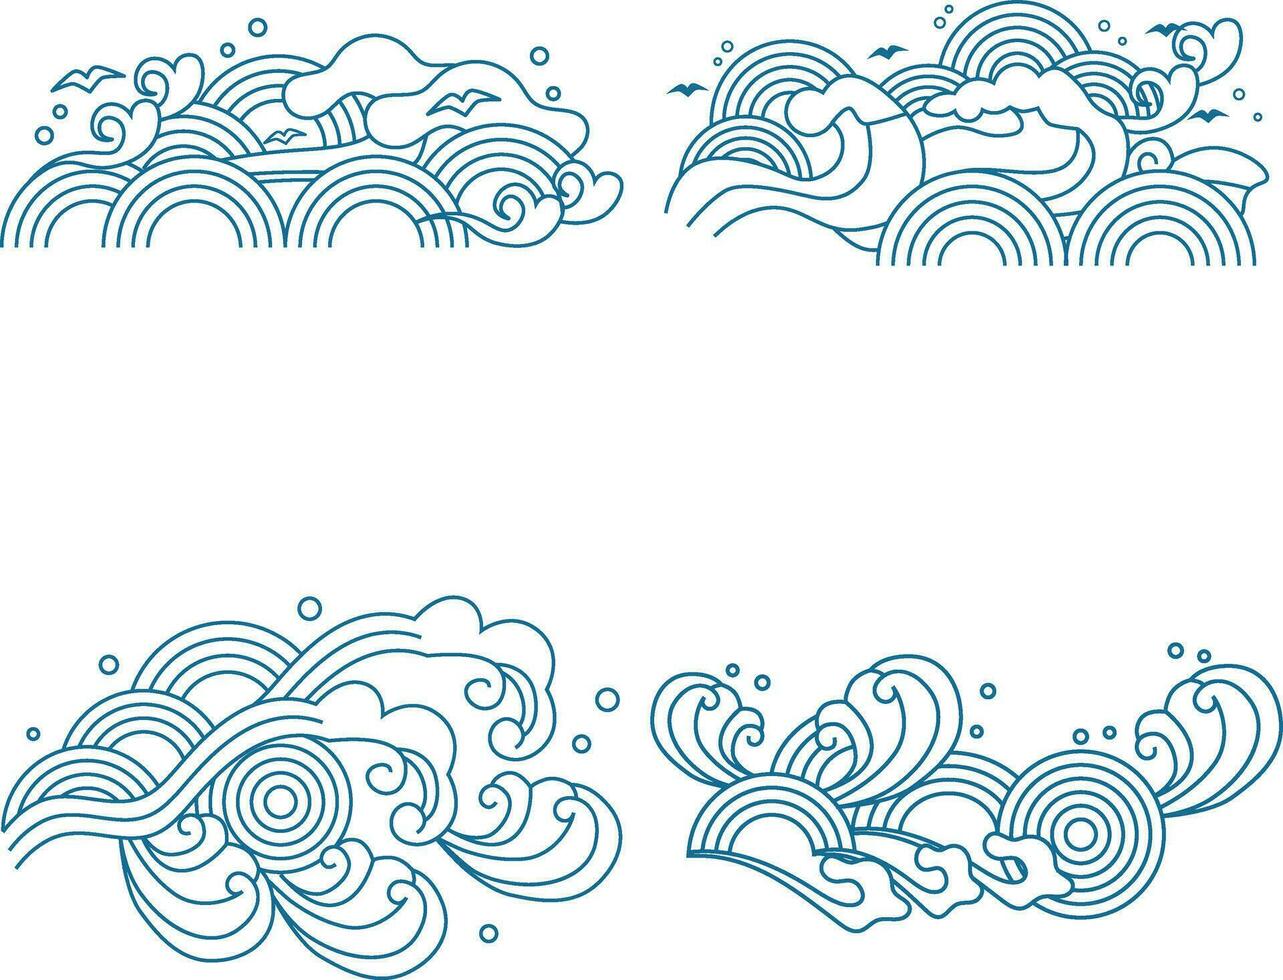 chino tradicional ola iconos japonés modelo. aislado vector conjunto